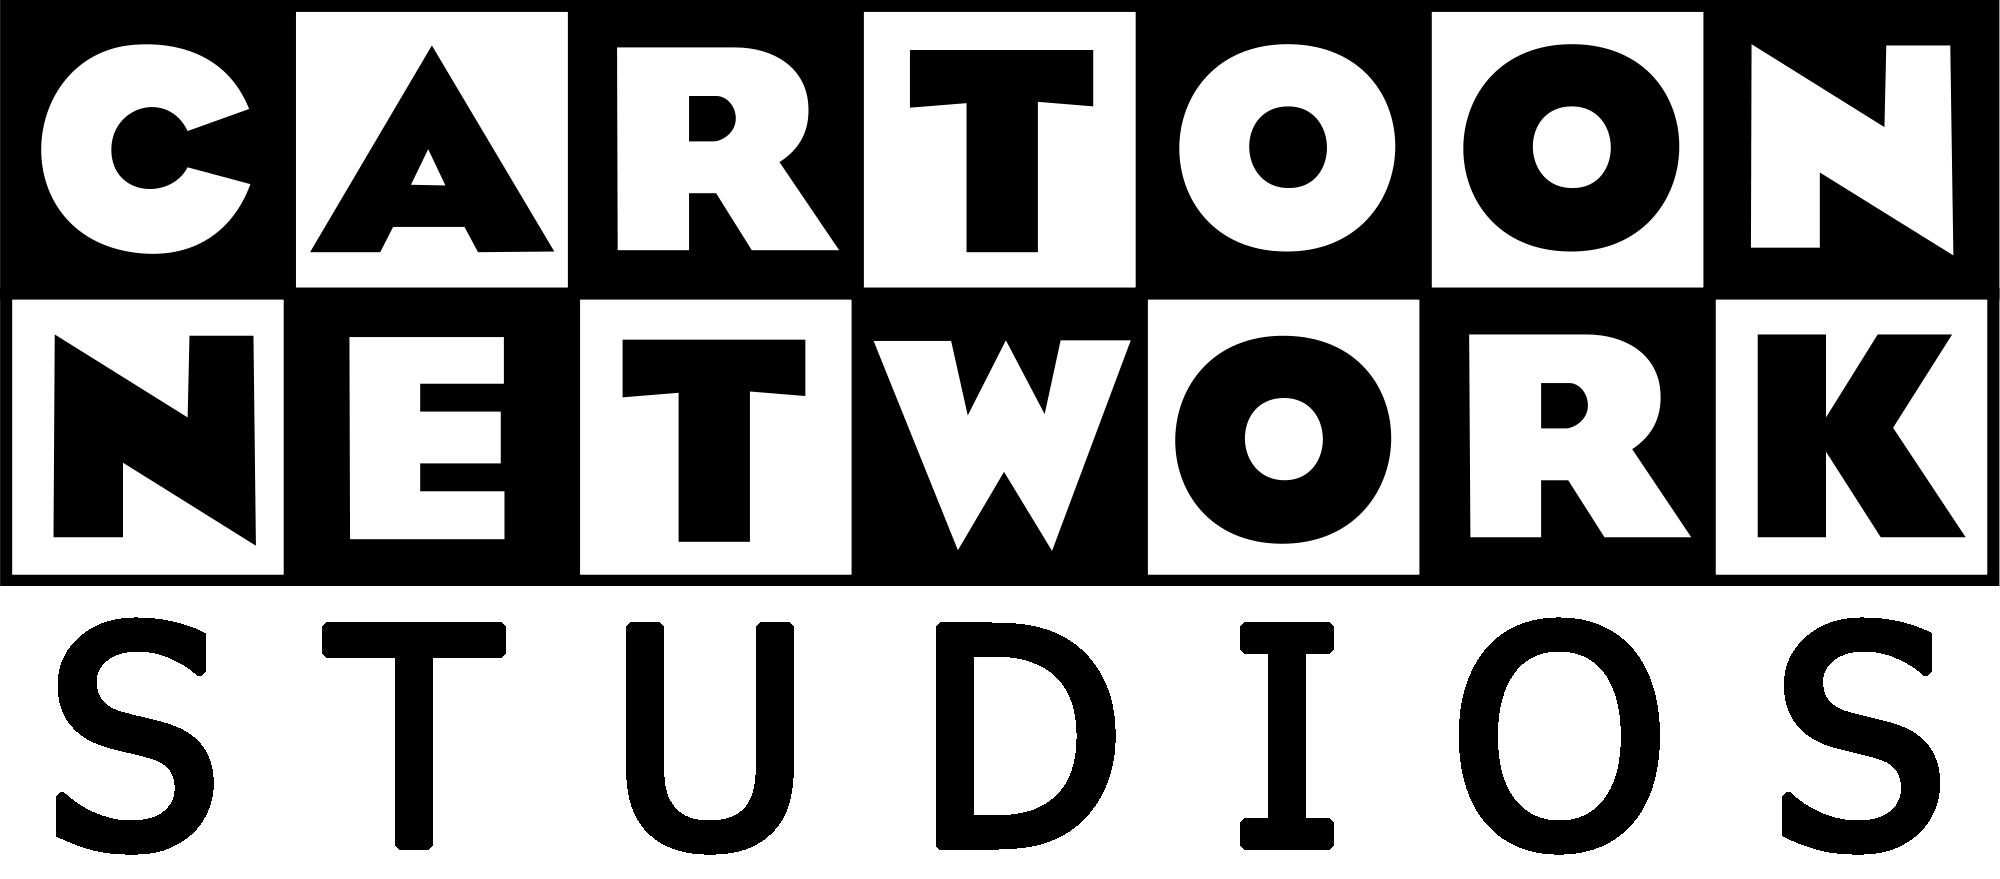 Cartoon Network Studios Logo - File:Cartoon Network Studios 1st logo v1.png - Wikimedia Commons